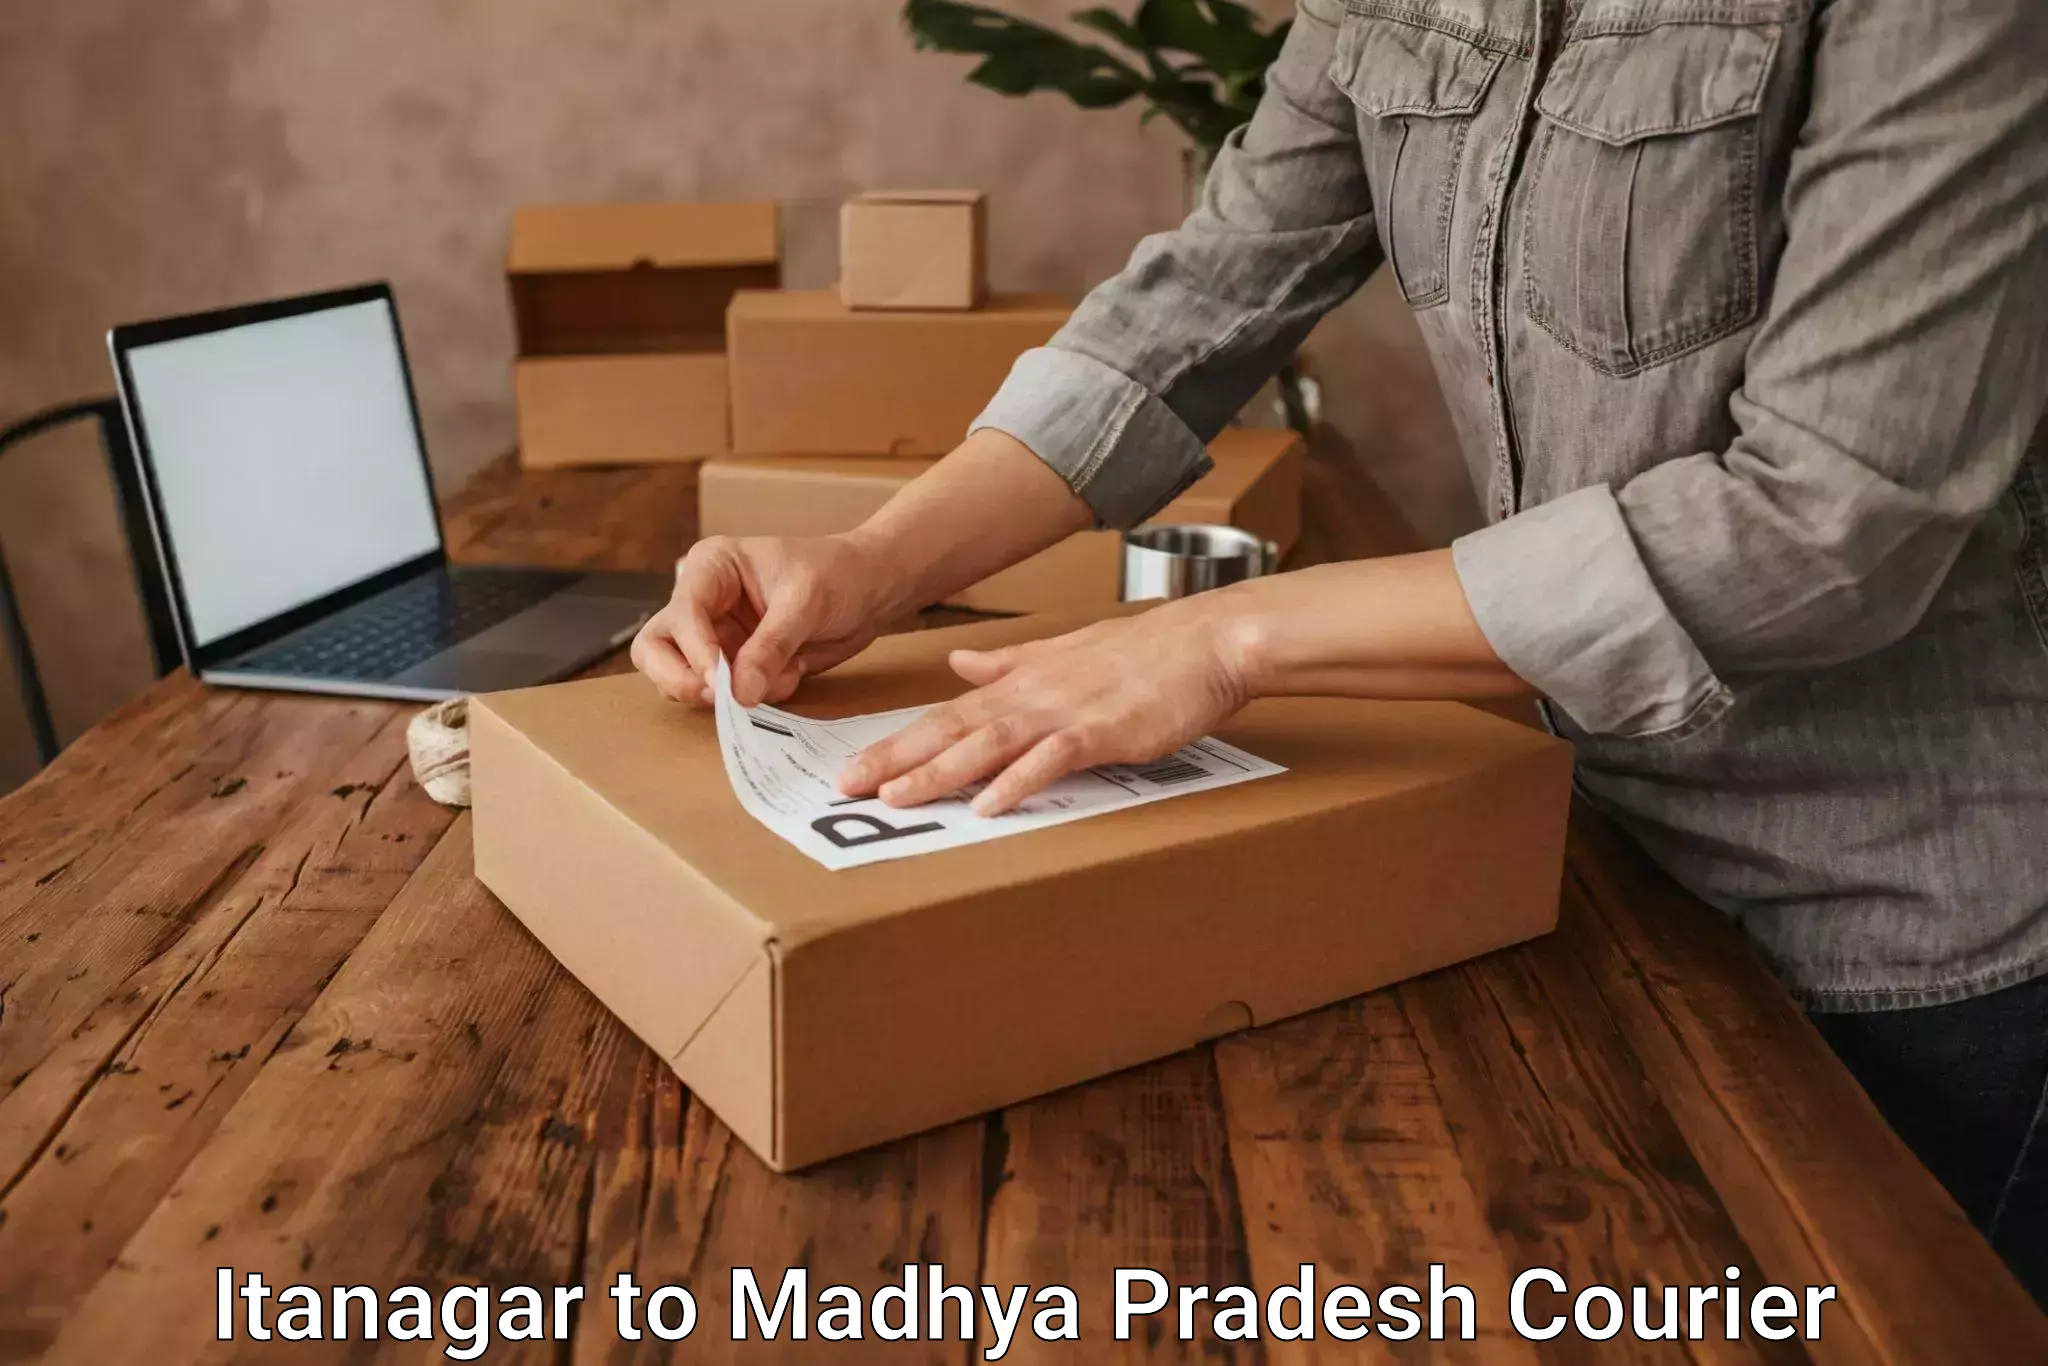 Courier service innovation Itanagar to Raipur Karchuliyan